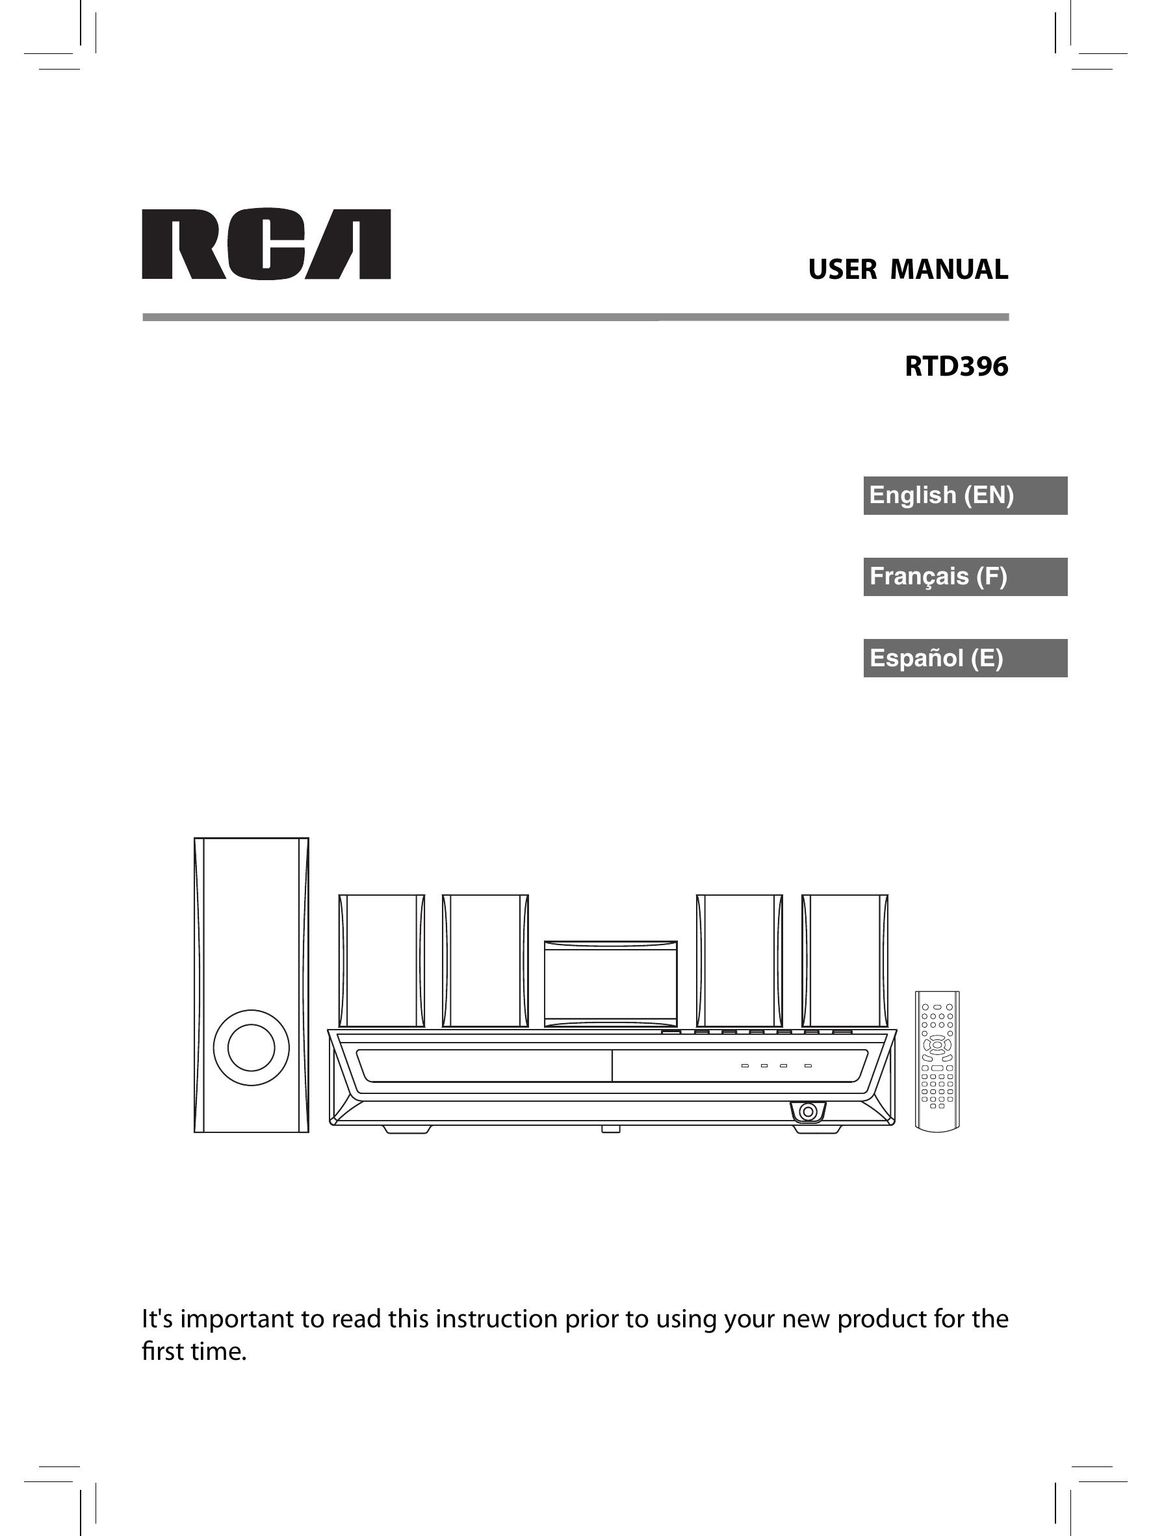 RCA RTD396 Car Speaker User Manual